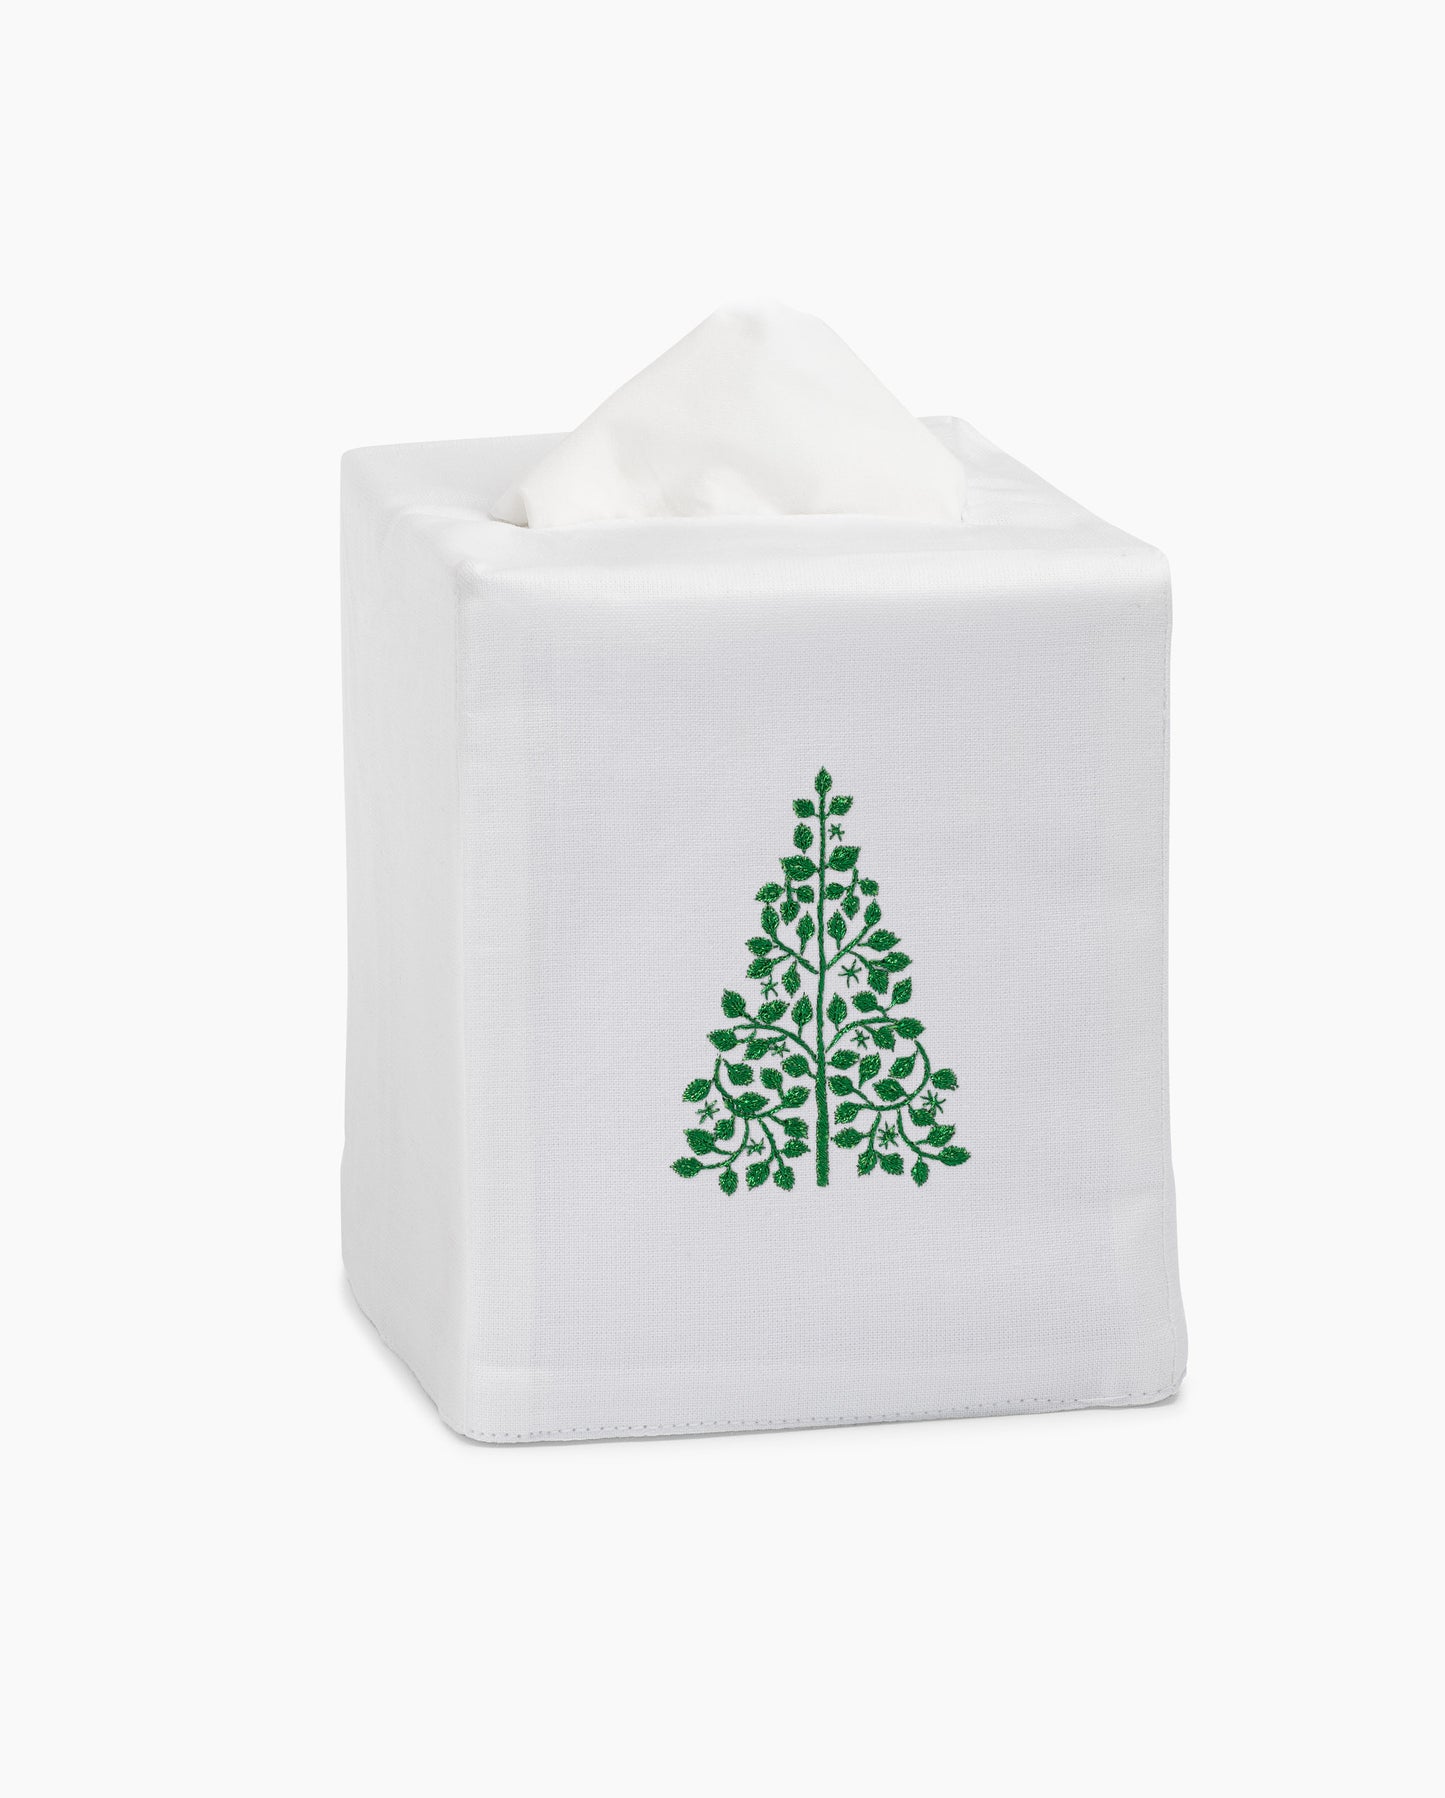 Mod Tree Green Tissue Box Cover